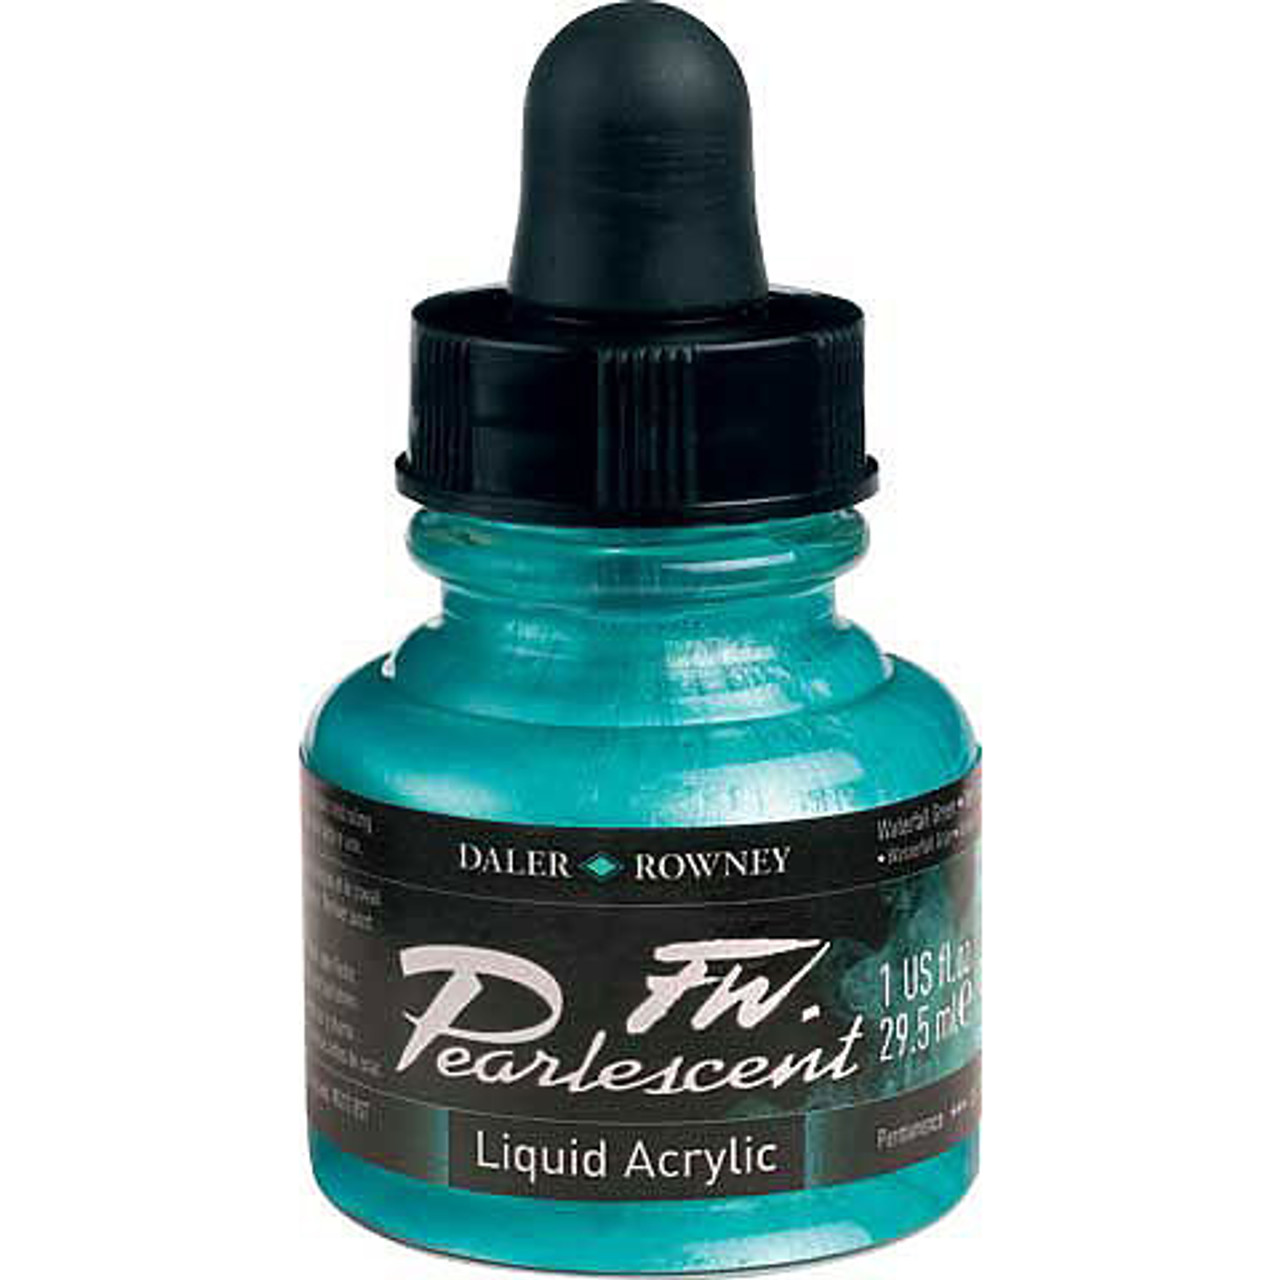 Daler-Rowney FW Pearlescent Liquid Acrylic Inks